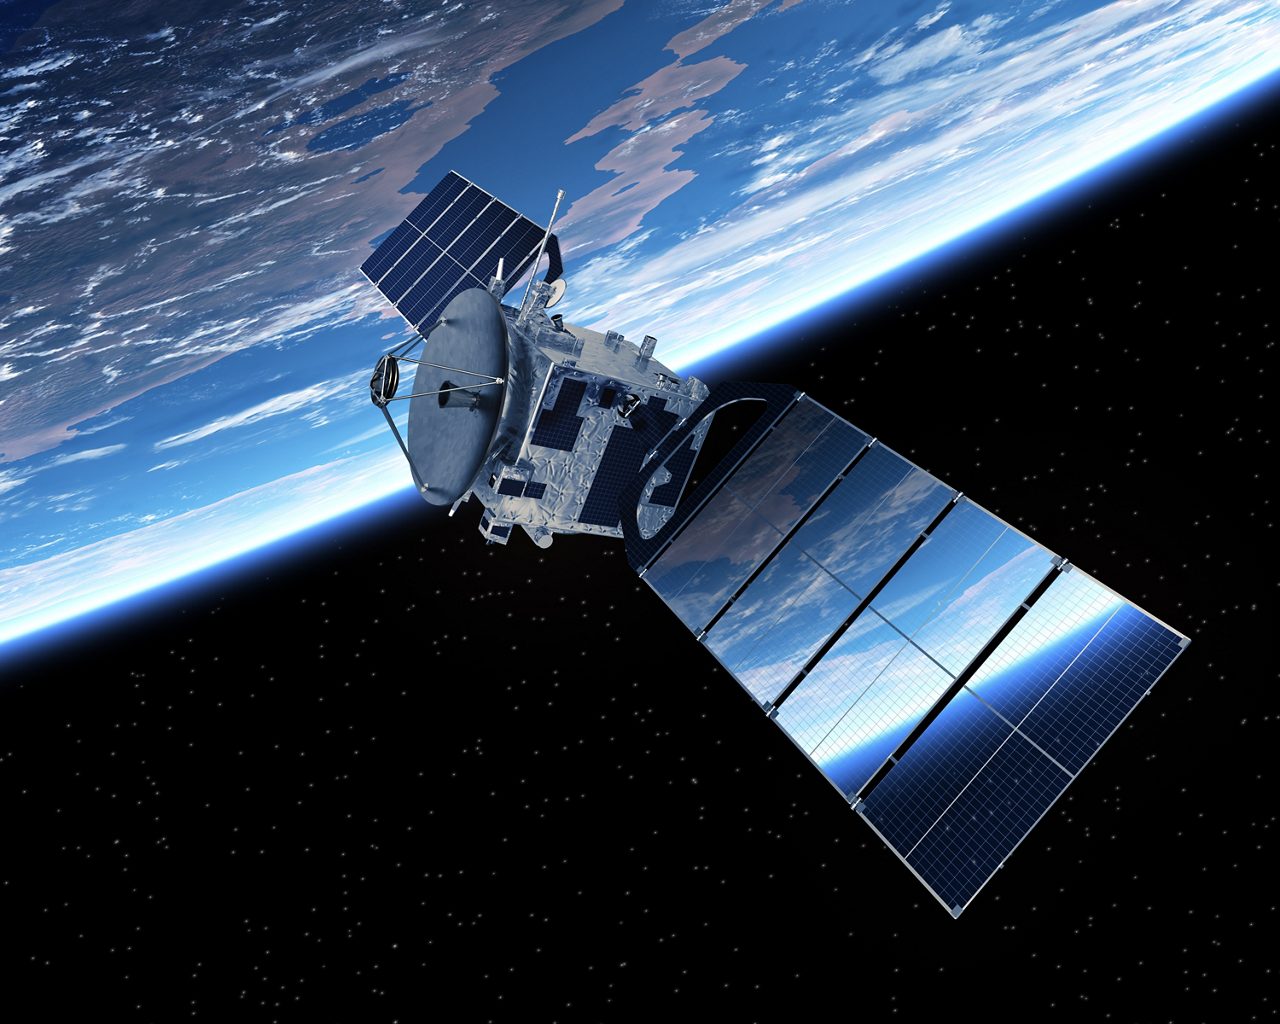 Communication satellite orbiting planet Earth